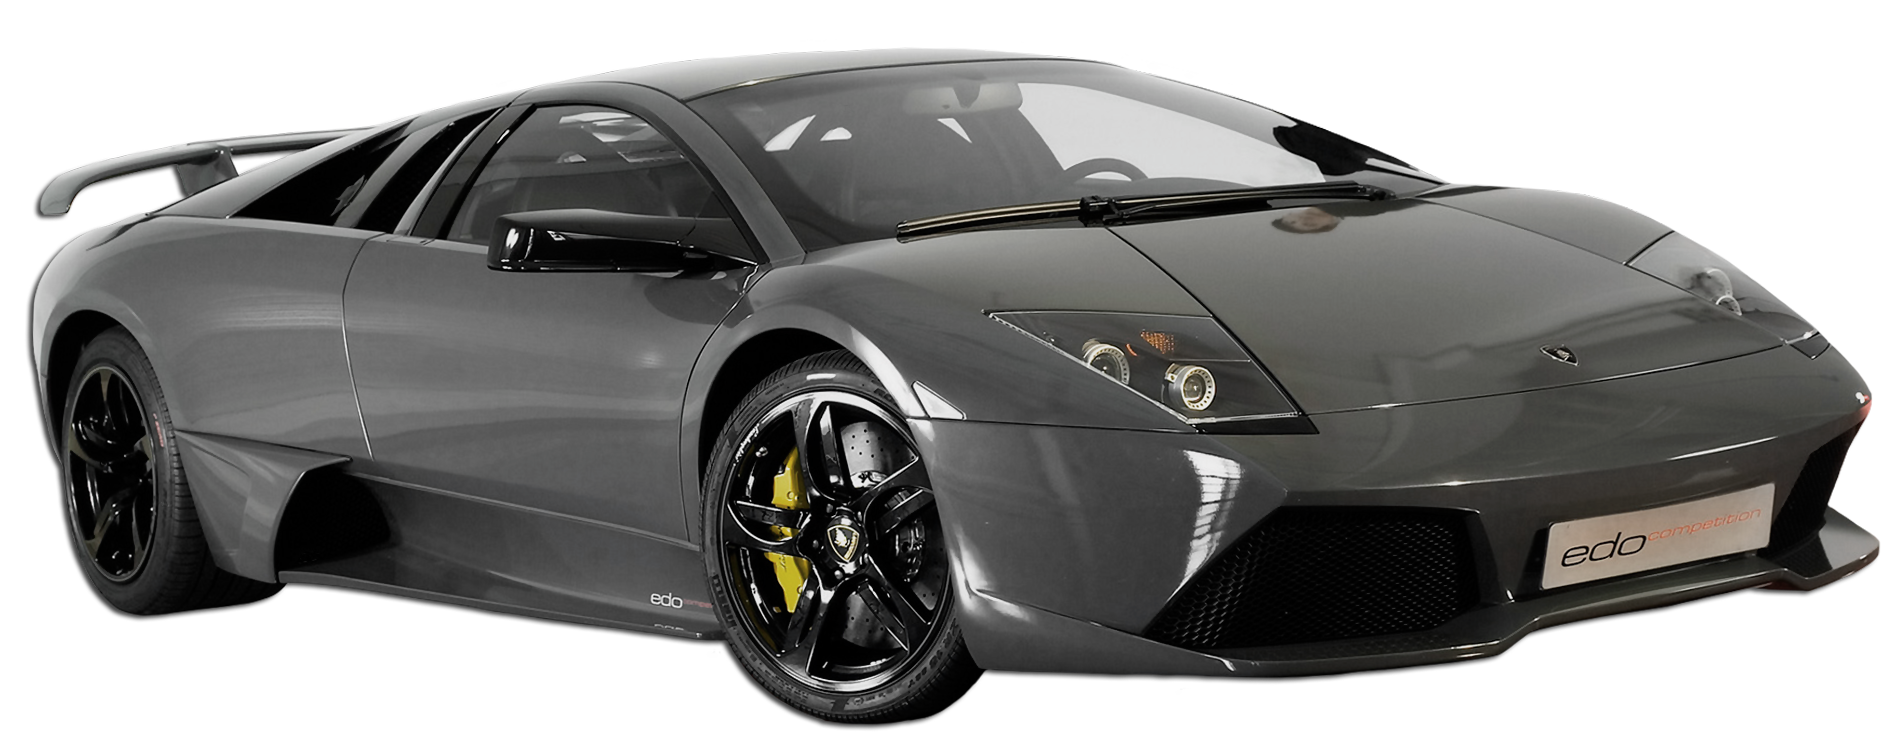 Makukulay na Side View Lamborghini Transparent Background